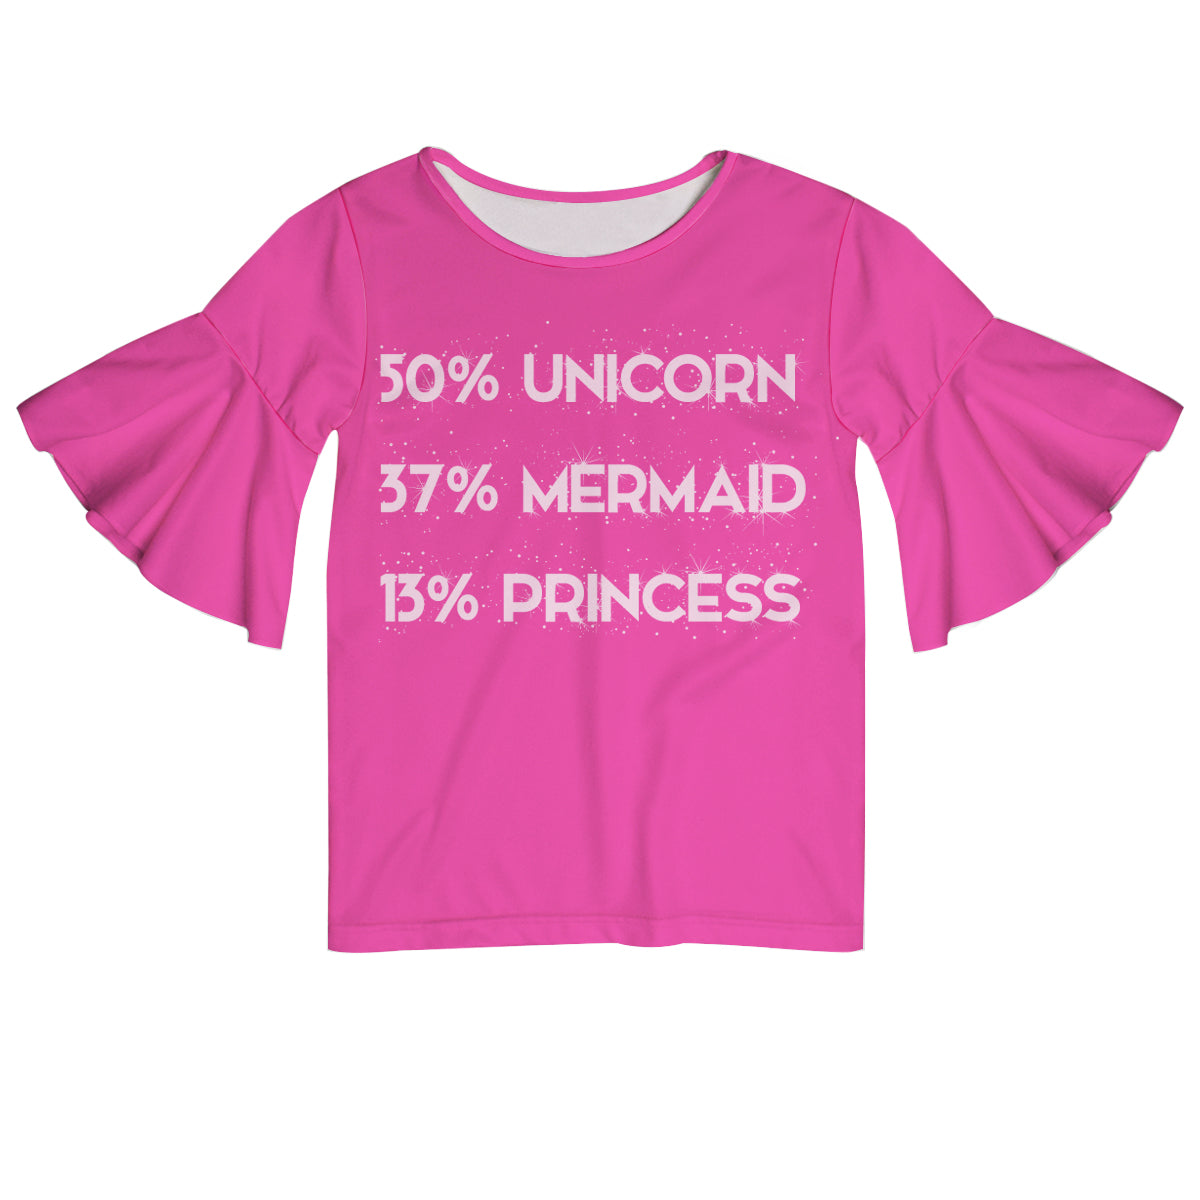 50% Unicorn Hot Pink Short Sleeve Ruffle Top